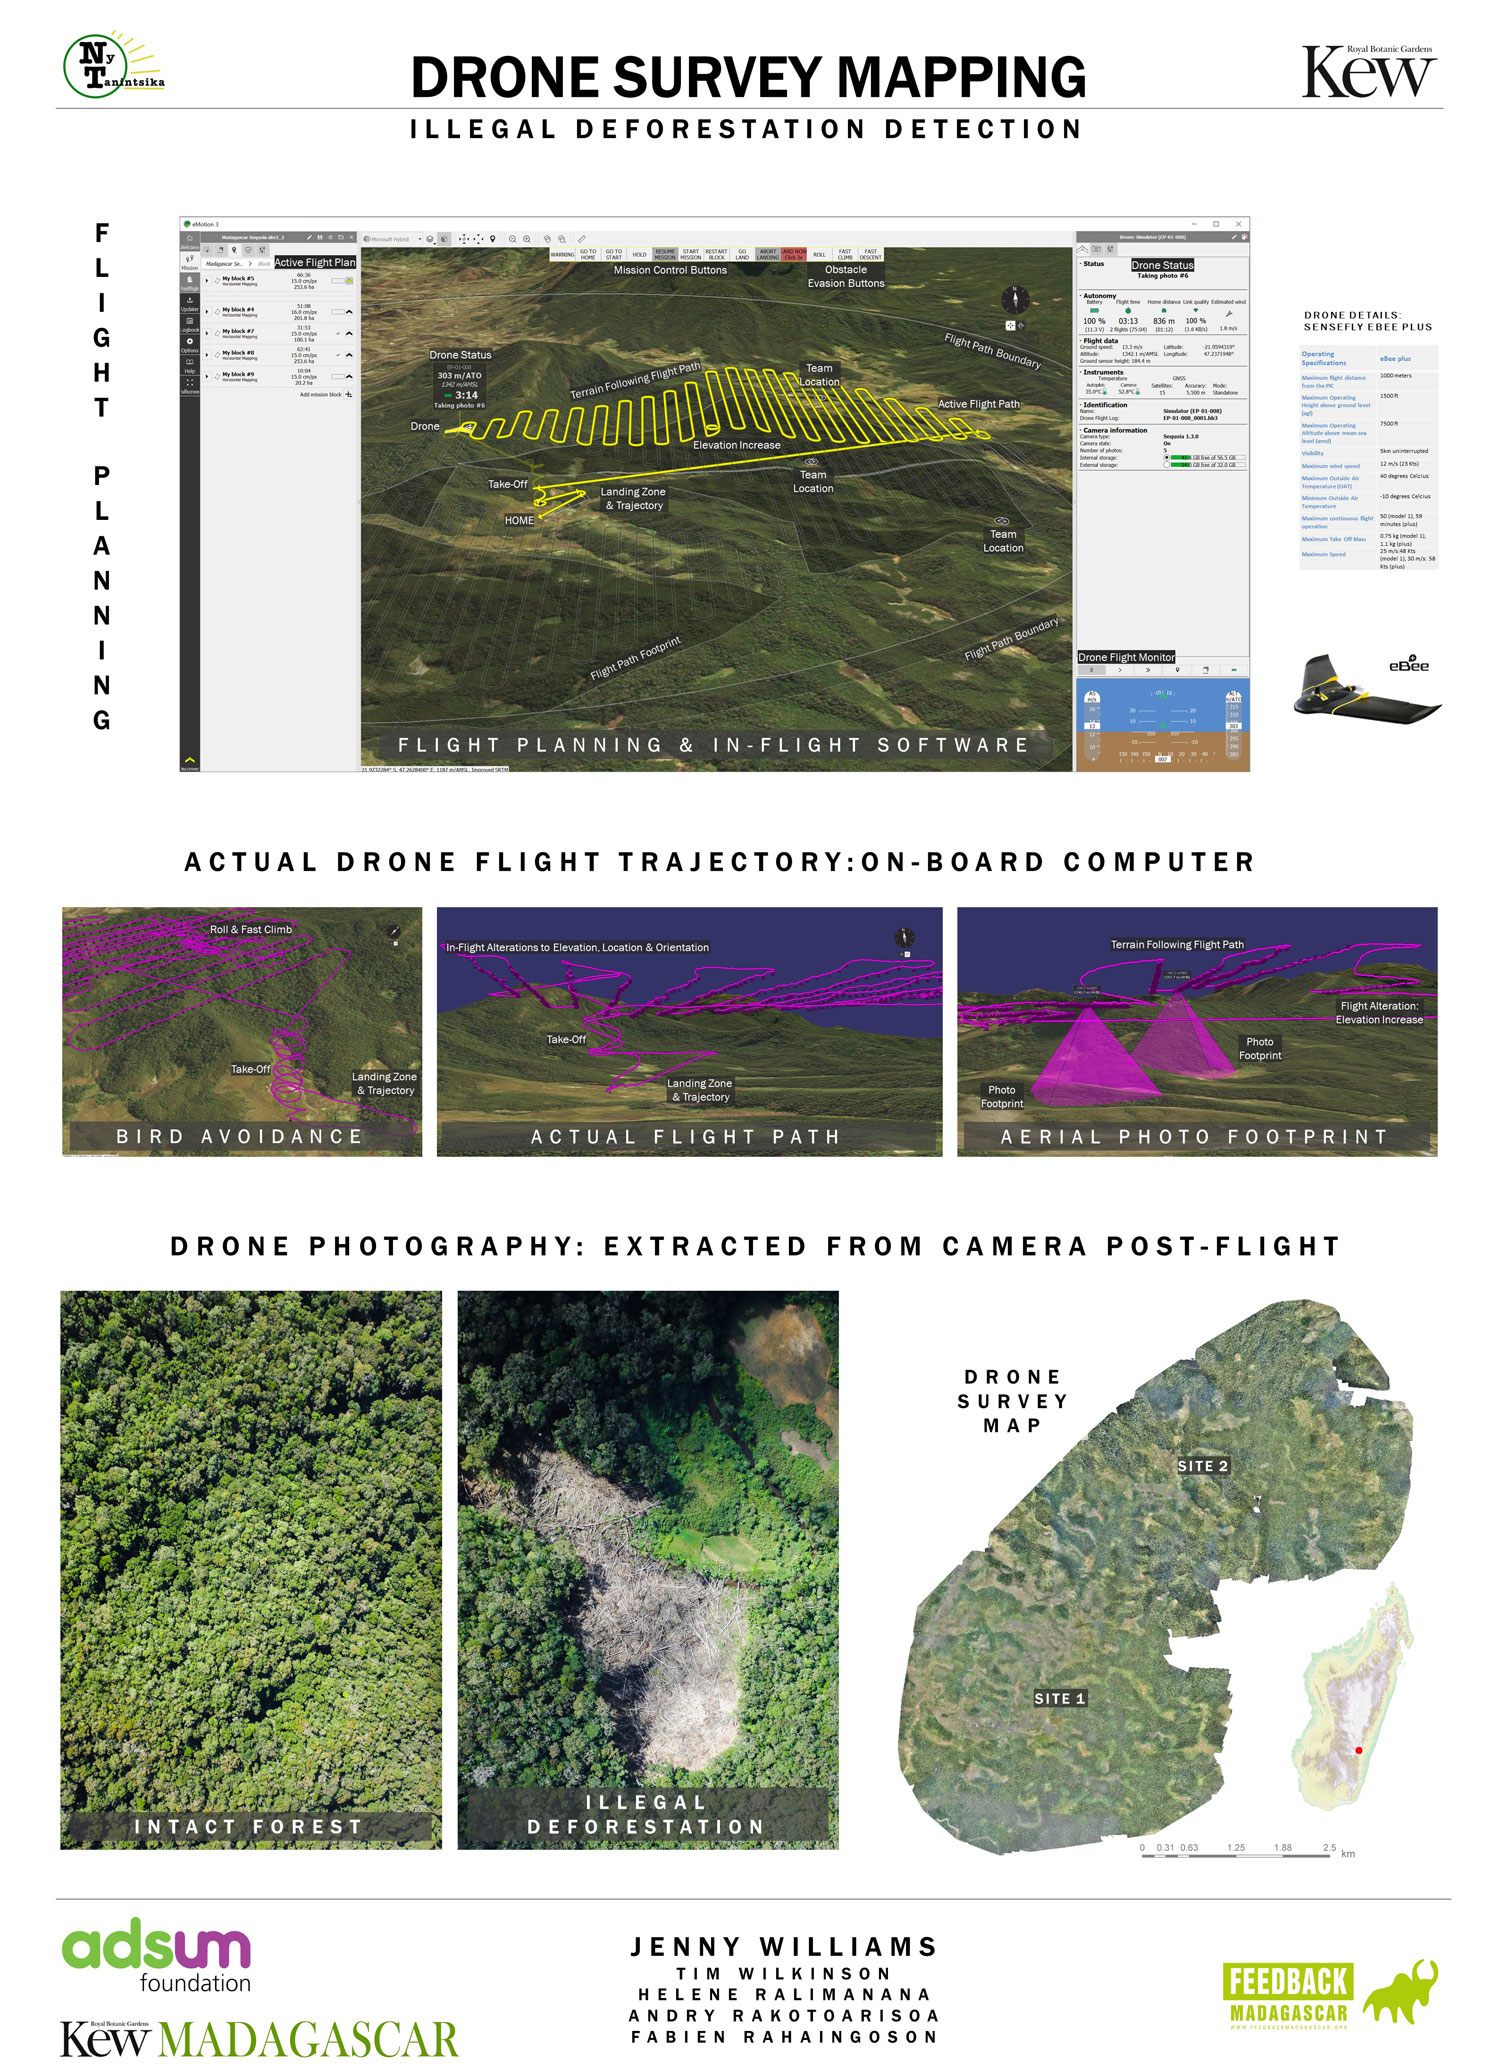 Poster showing aerial shots of deforestation